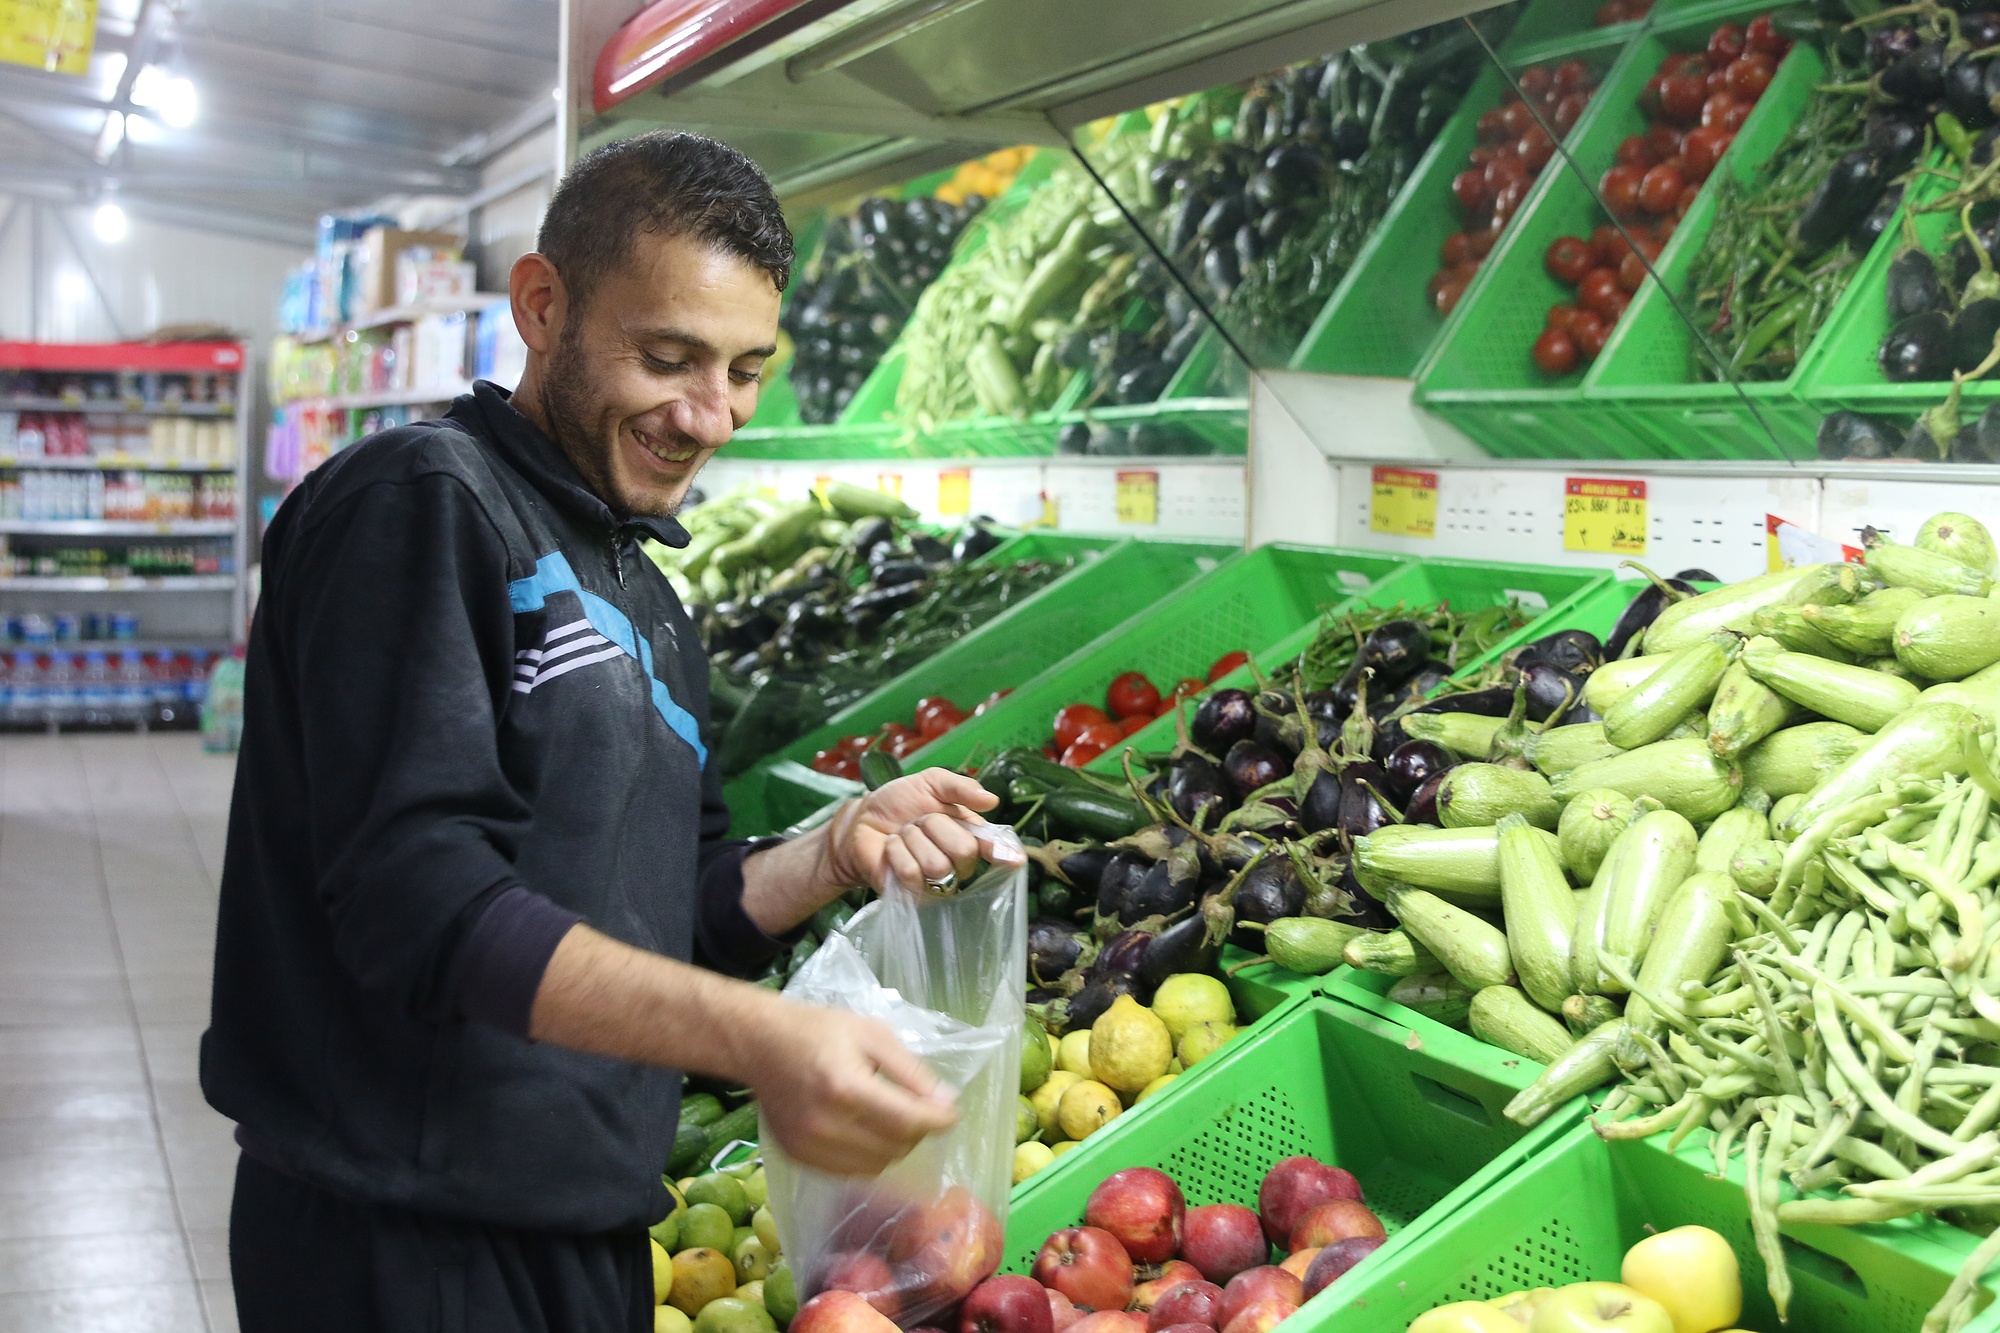 Nidal shops for vegetables in the supermarket of the Boynuyogun refugee camp in Turkey